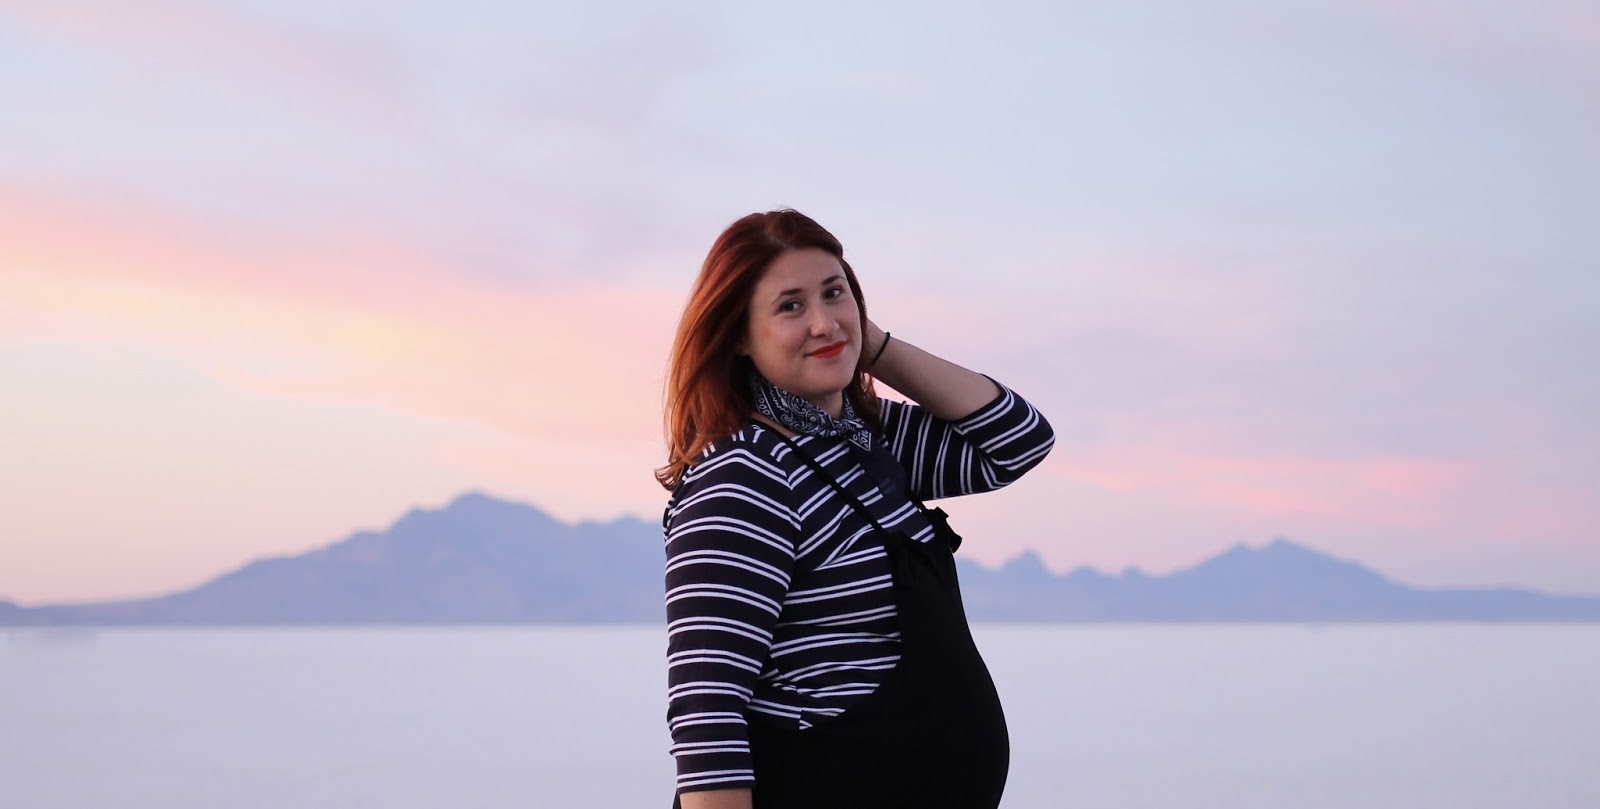 Bonneville salt Flats, Maternity style, overalls, red hair, sunset